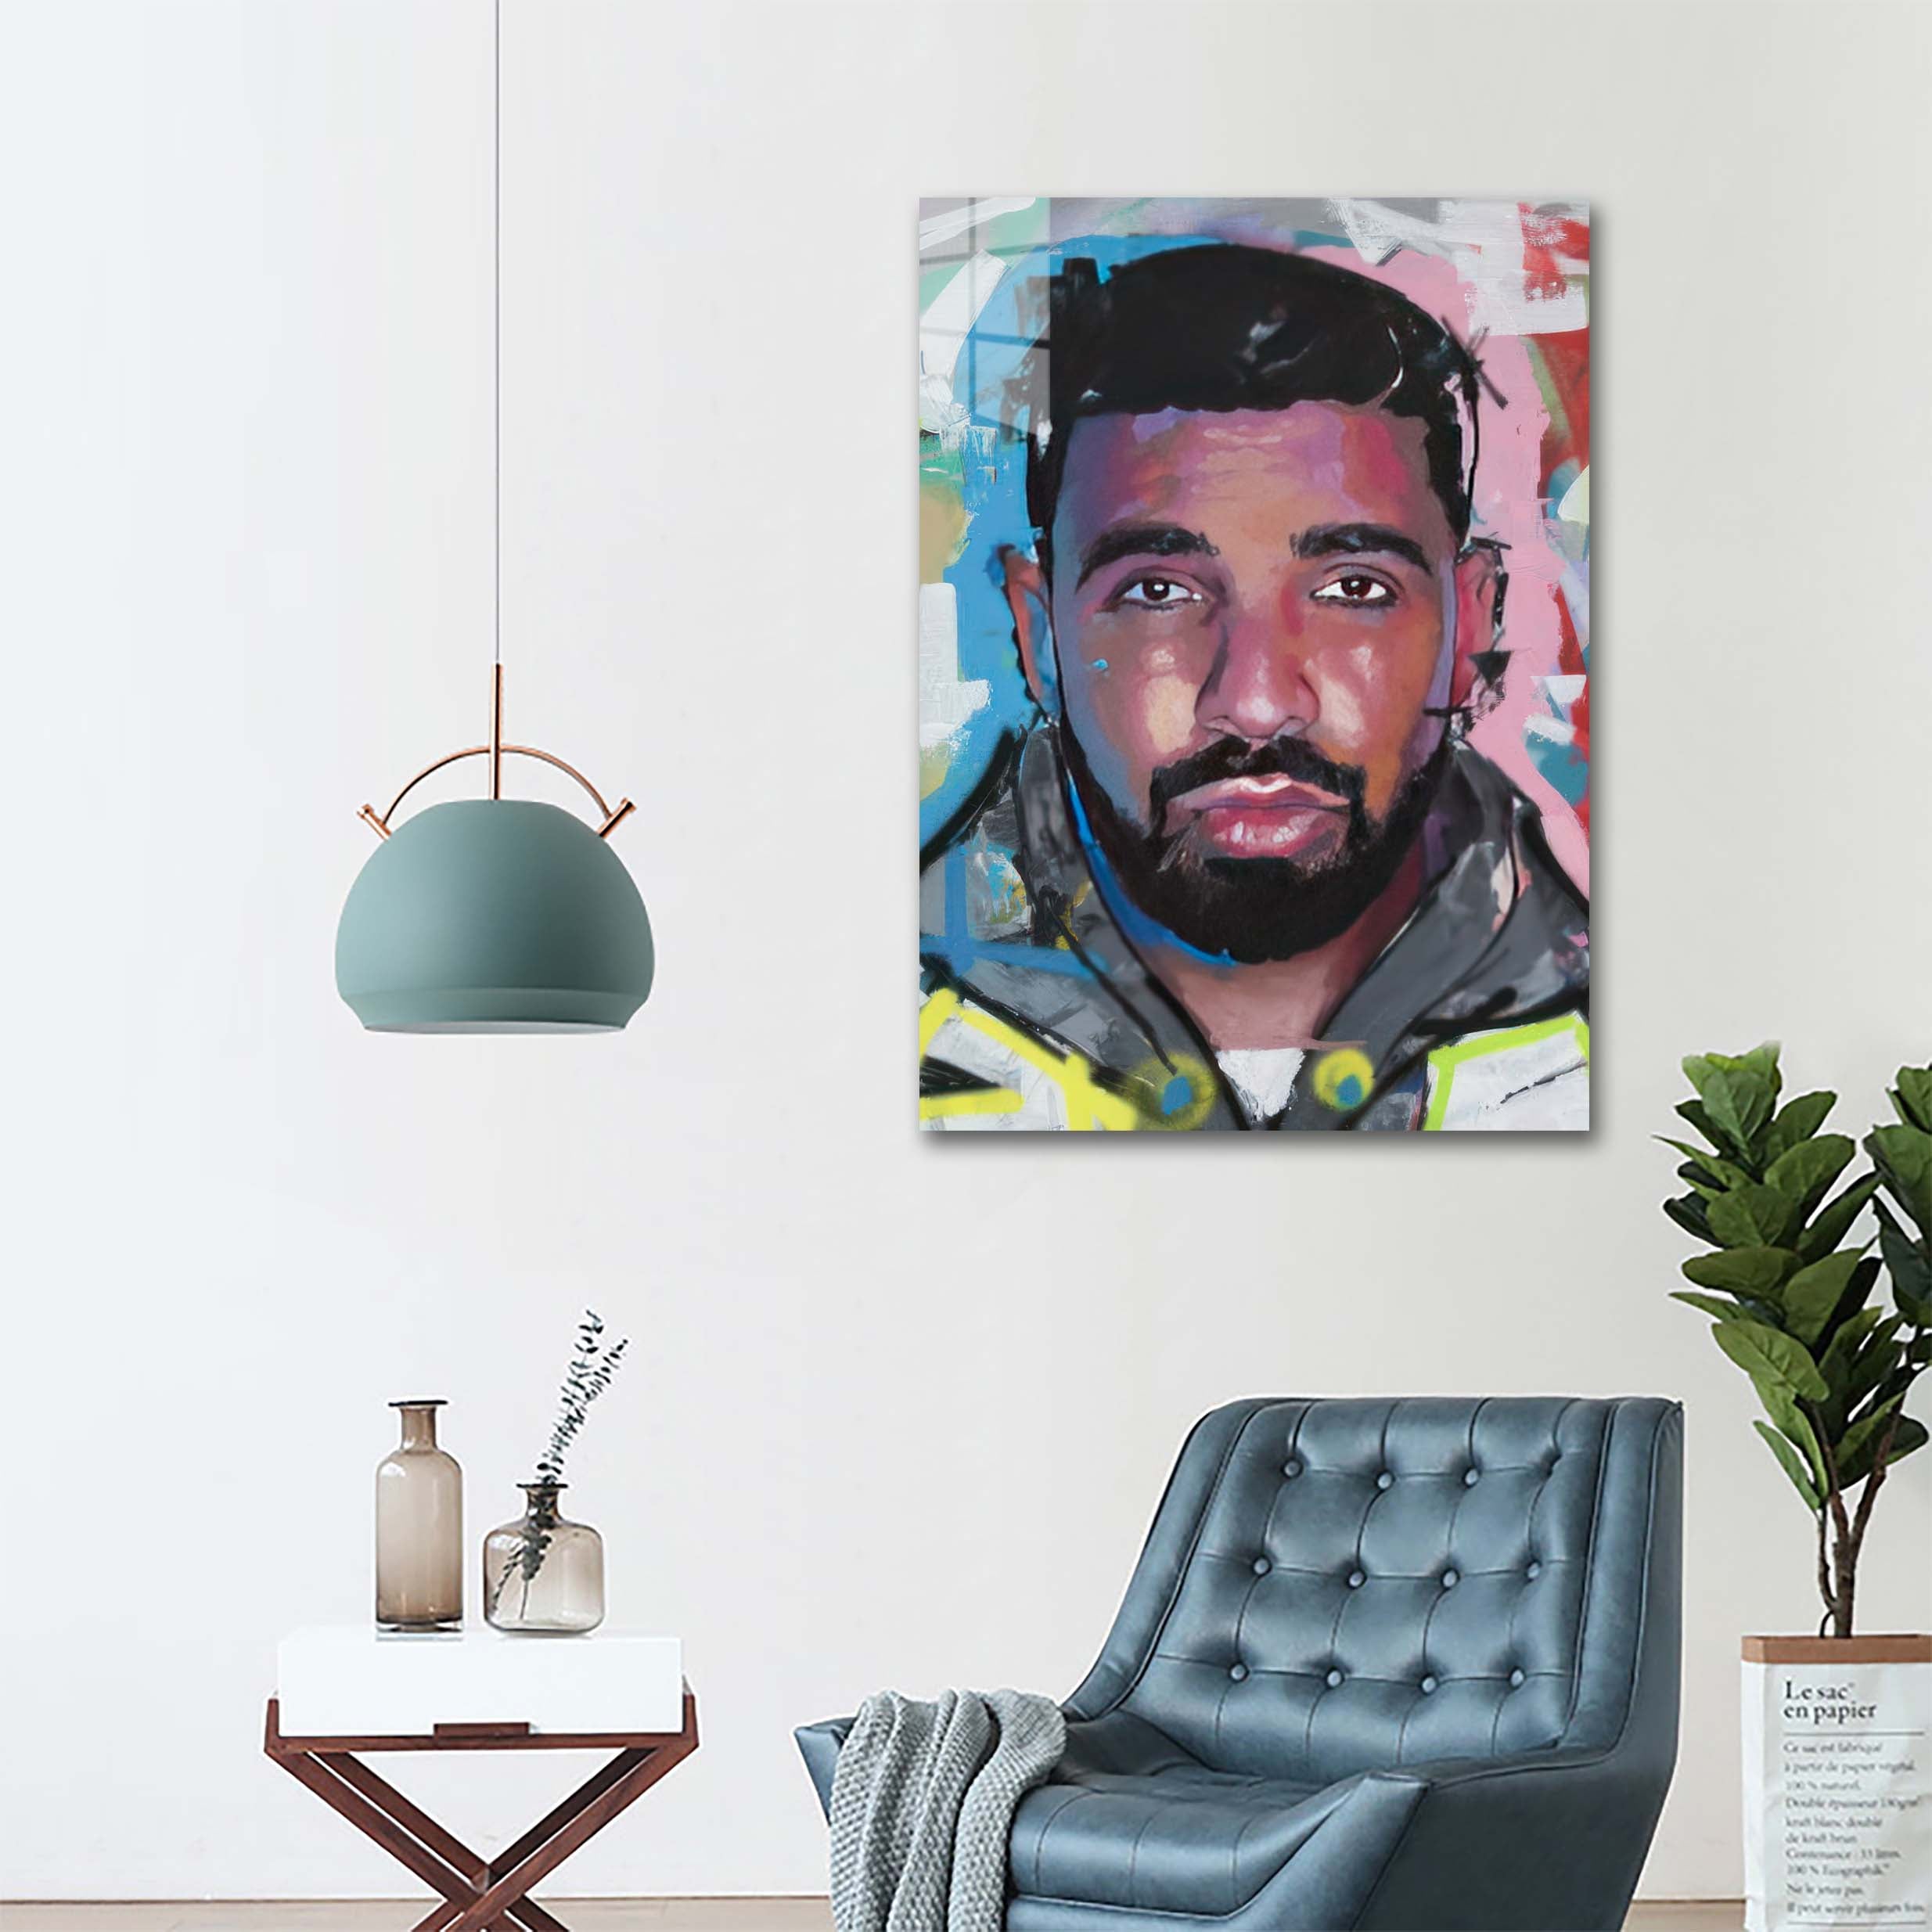 Drake-designed by @Vinahayum